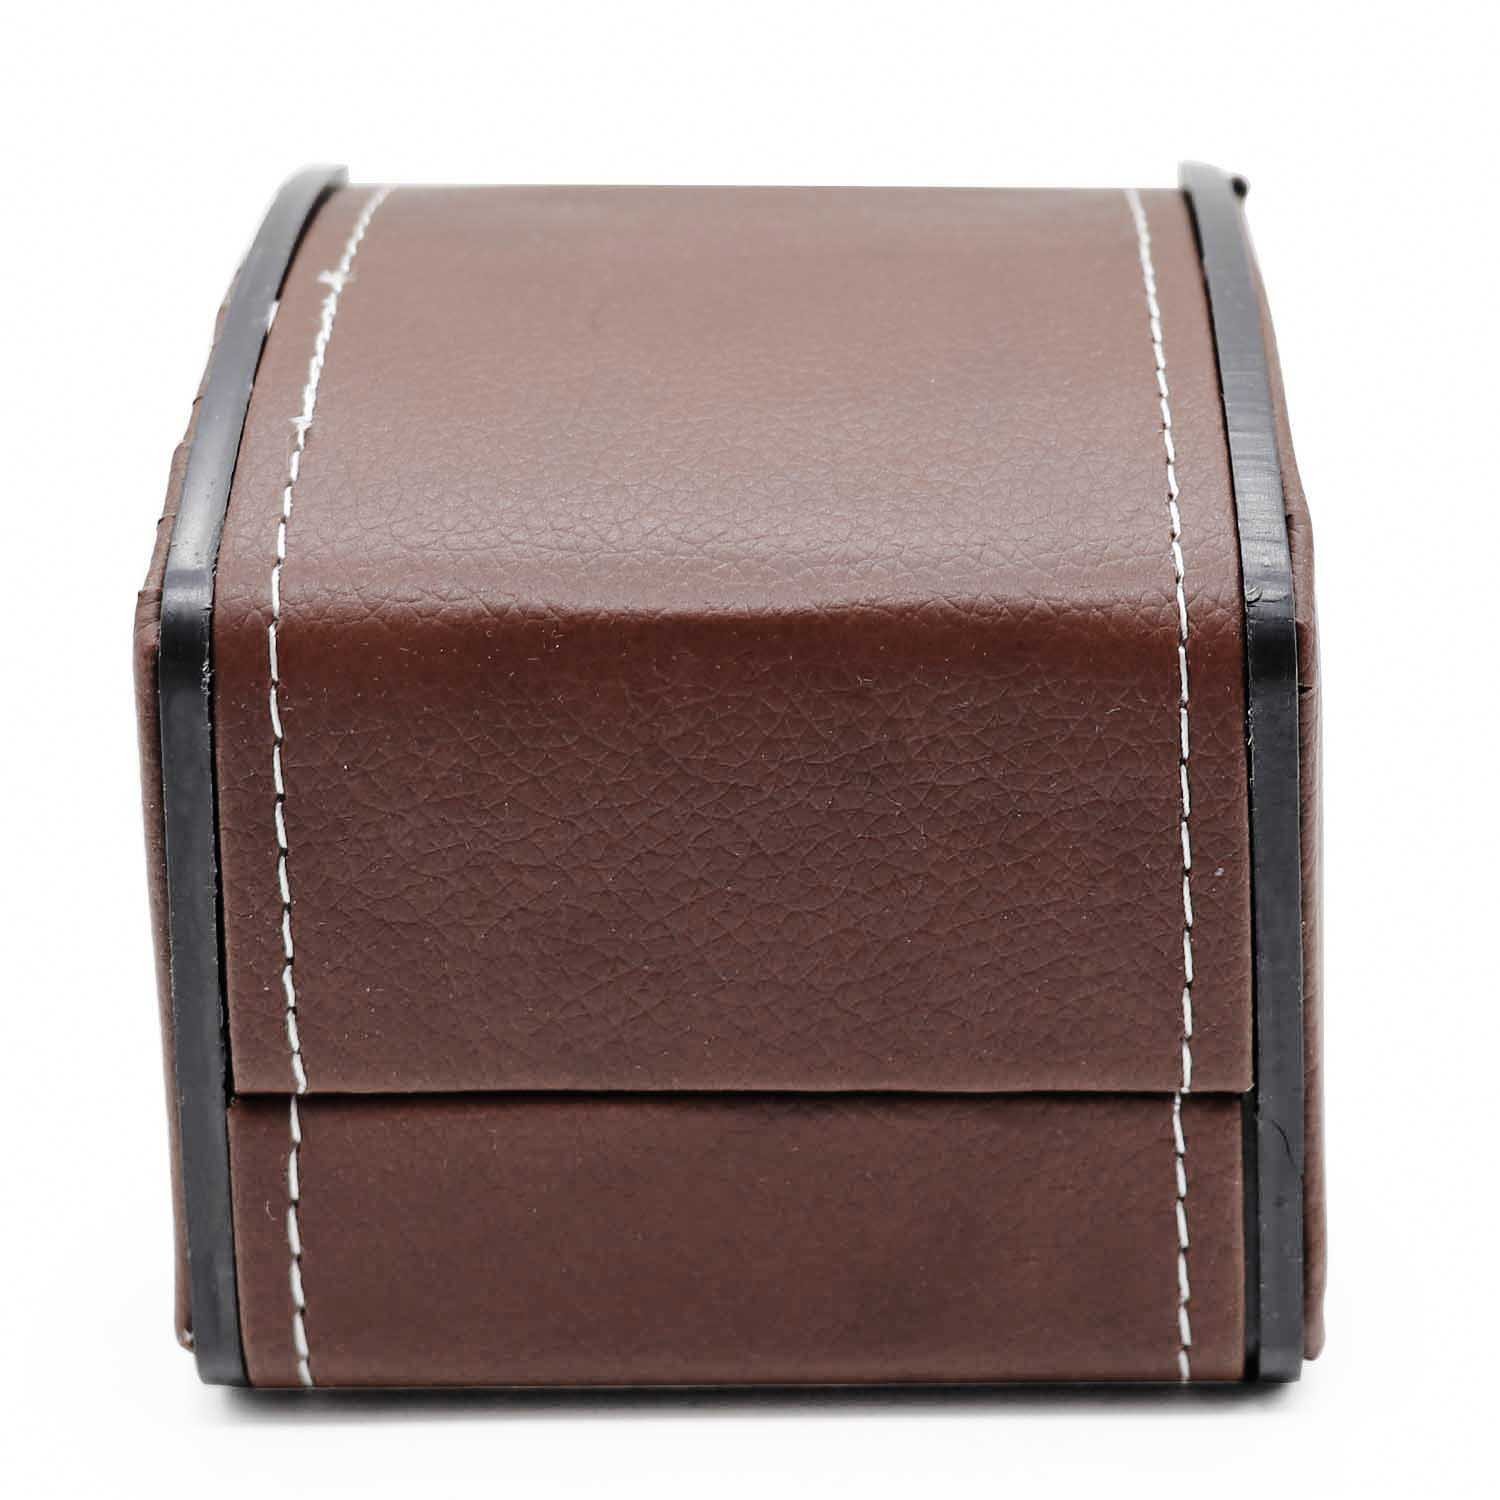 AVESON Watch Box Holder Organizer, PU Leather Travel Jewelry Bracelet Storage Gift Case Single Grid, Coffee